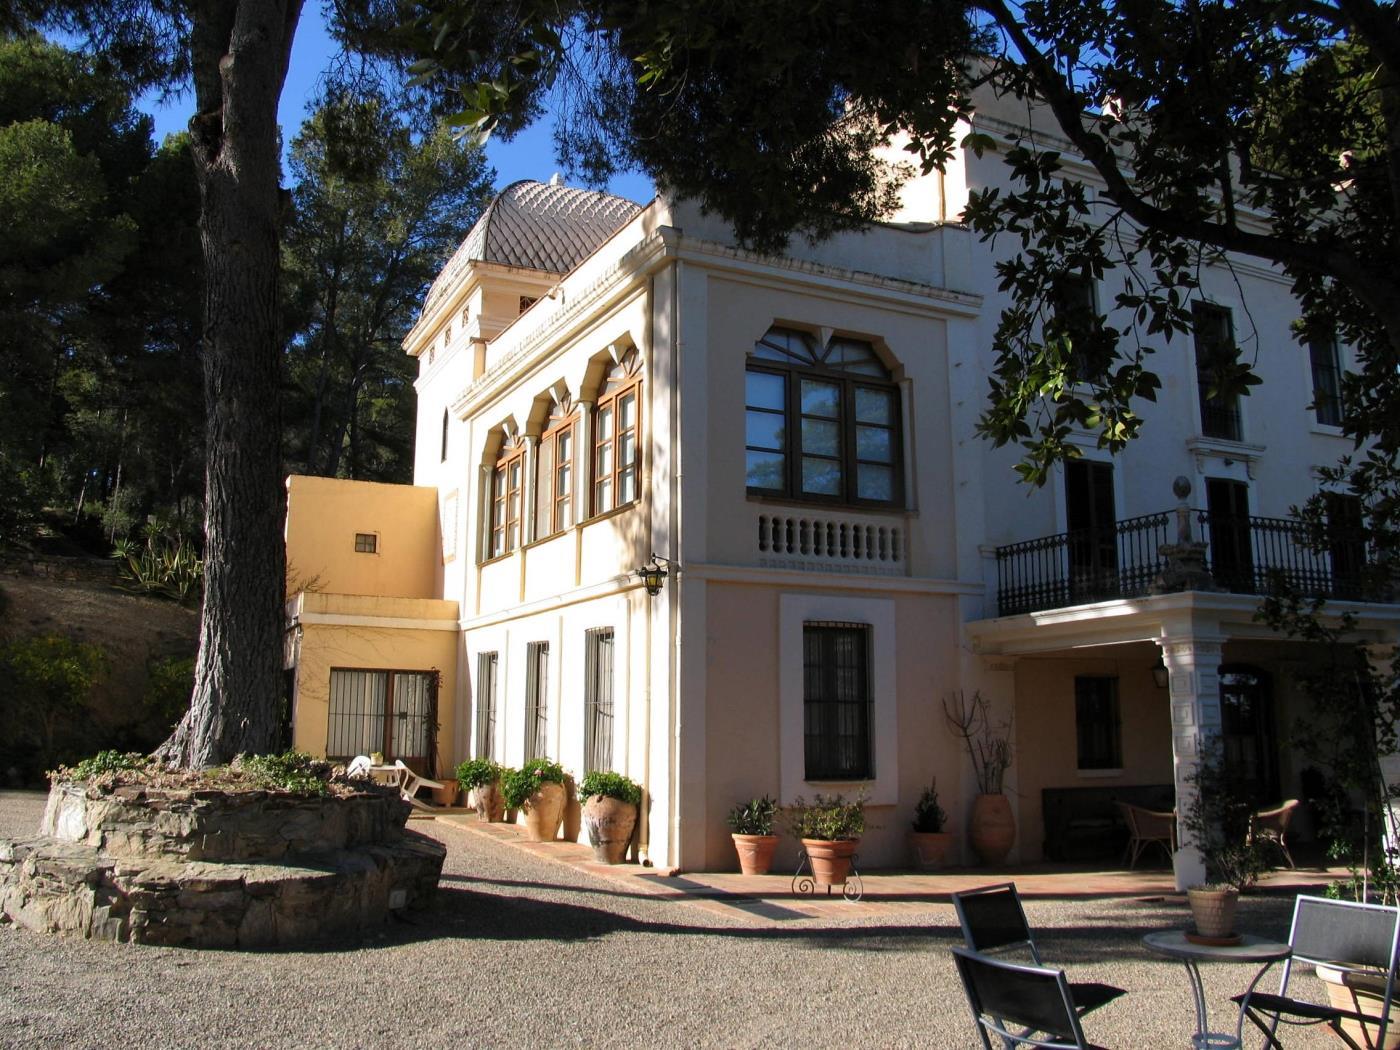 Casas Granada in Granada